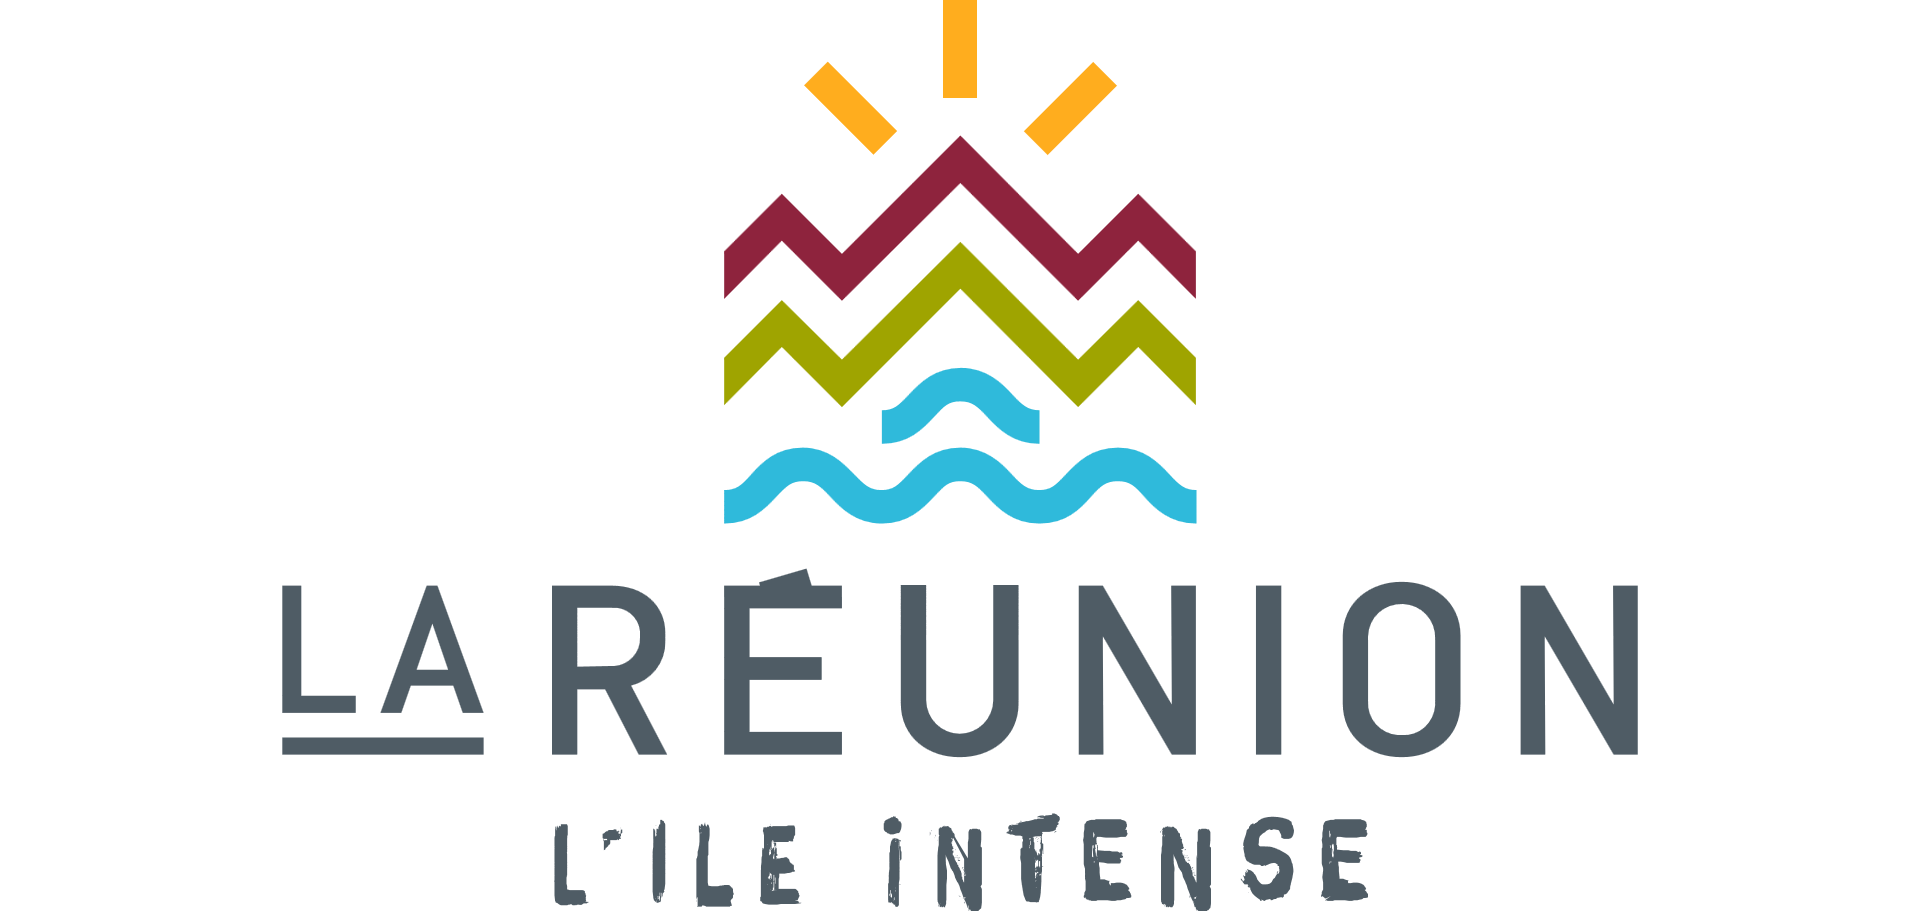 Brand island. Reunion logo.